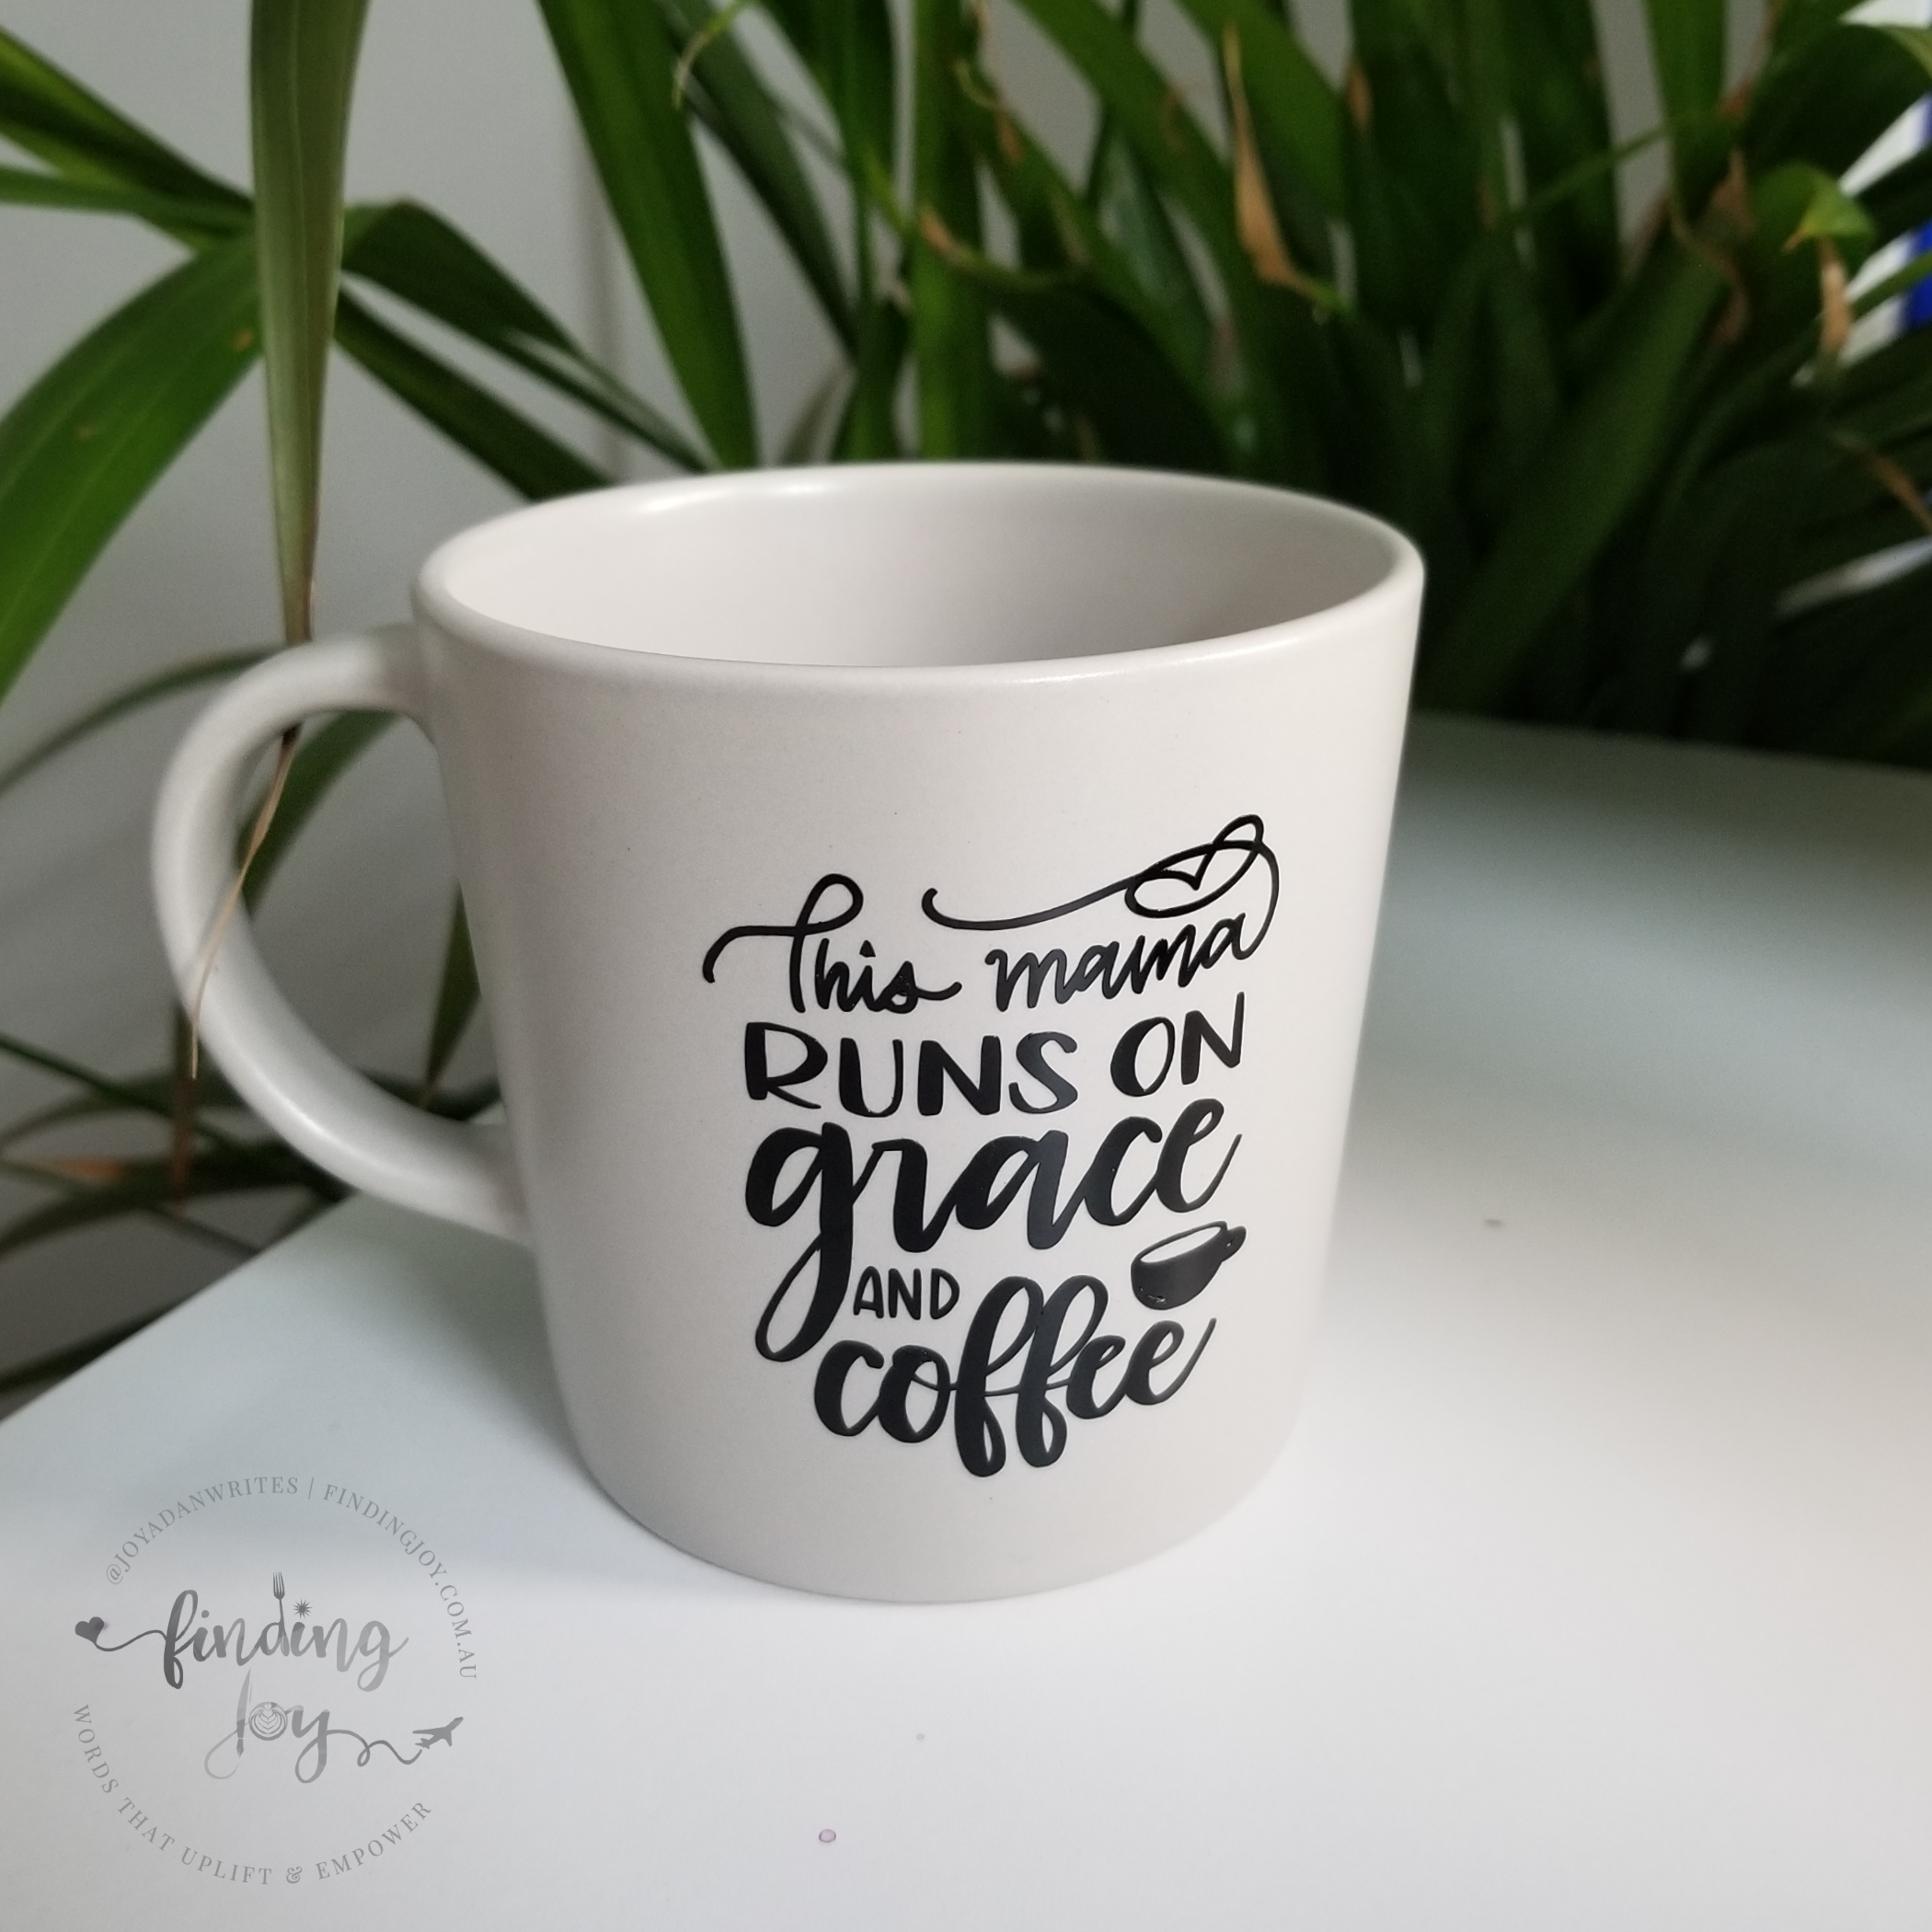 Coffee mug - Latte - This mama runs on grace and coffee